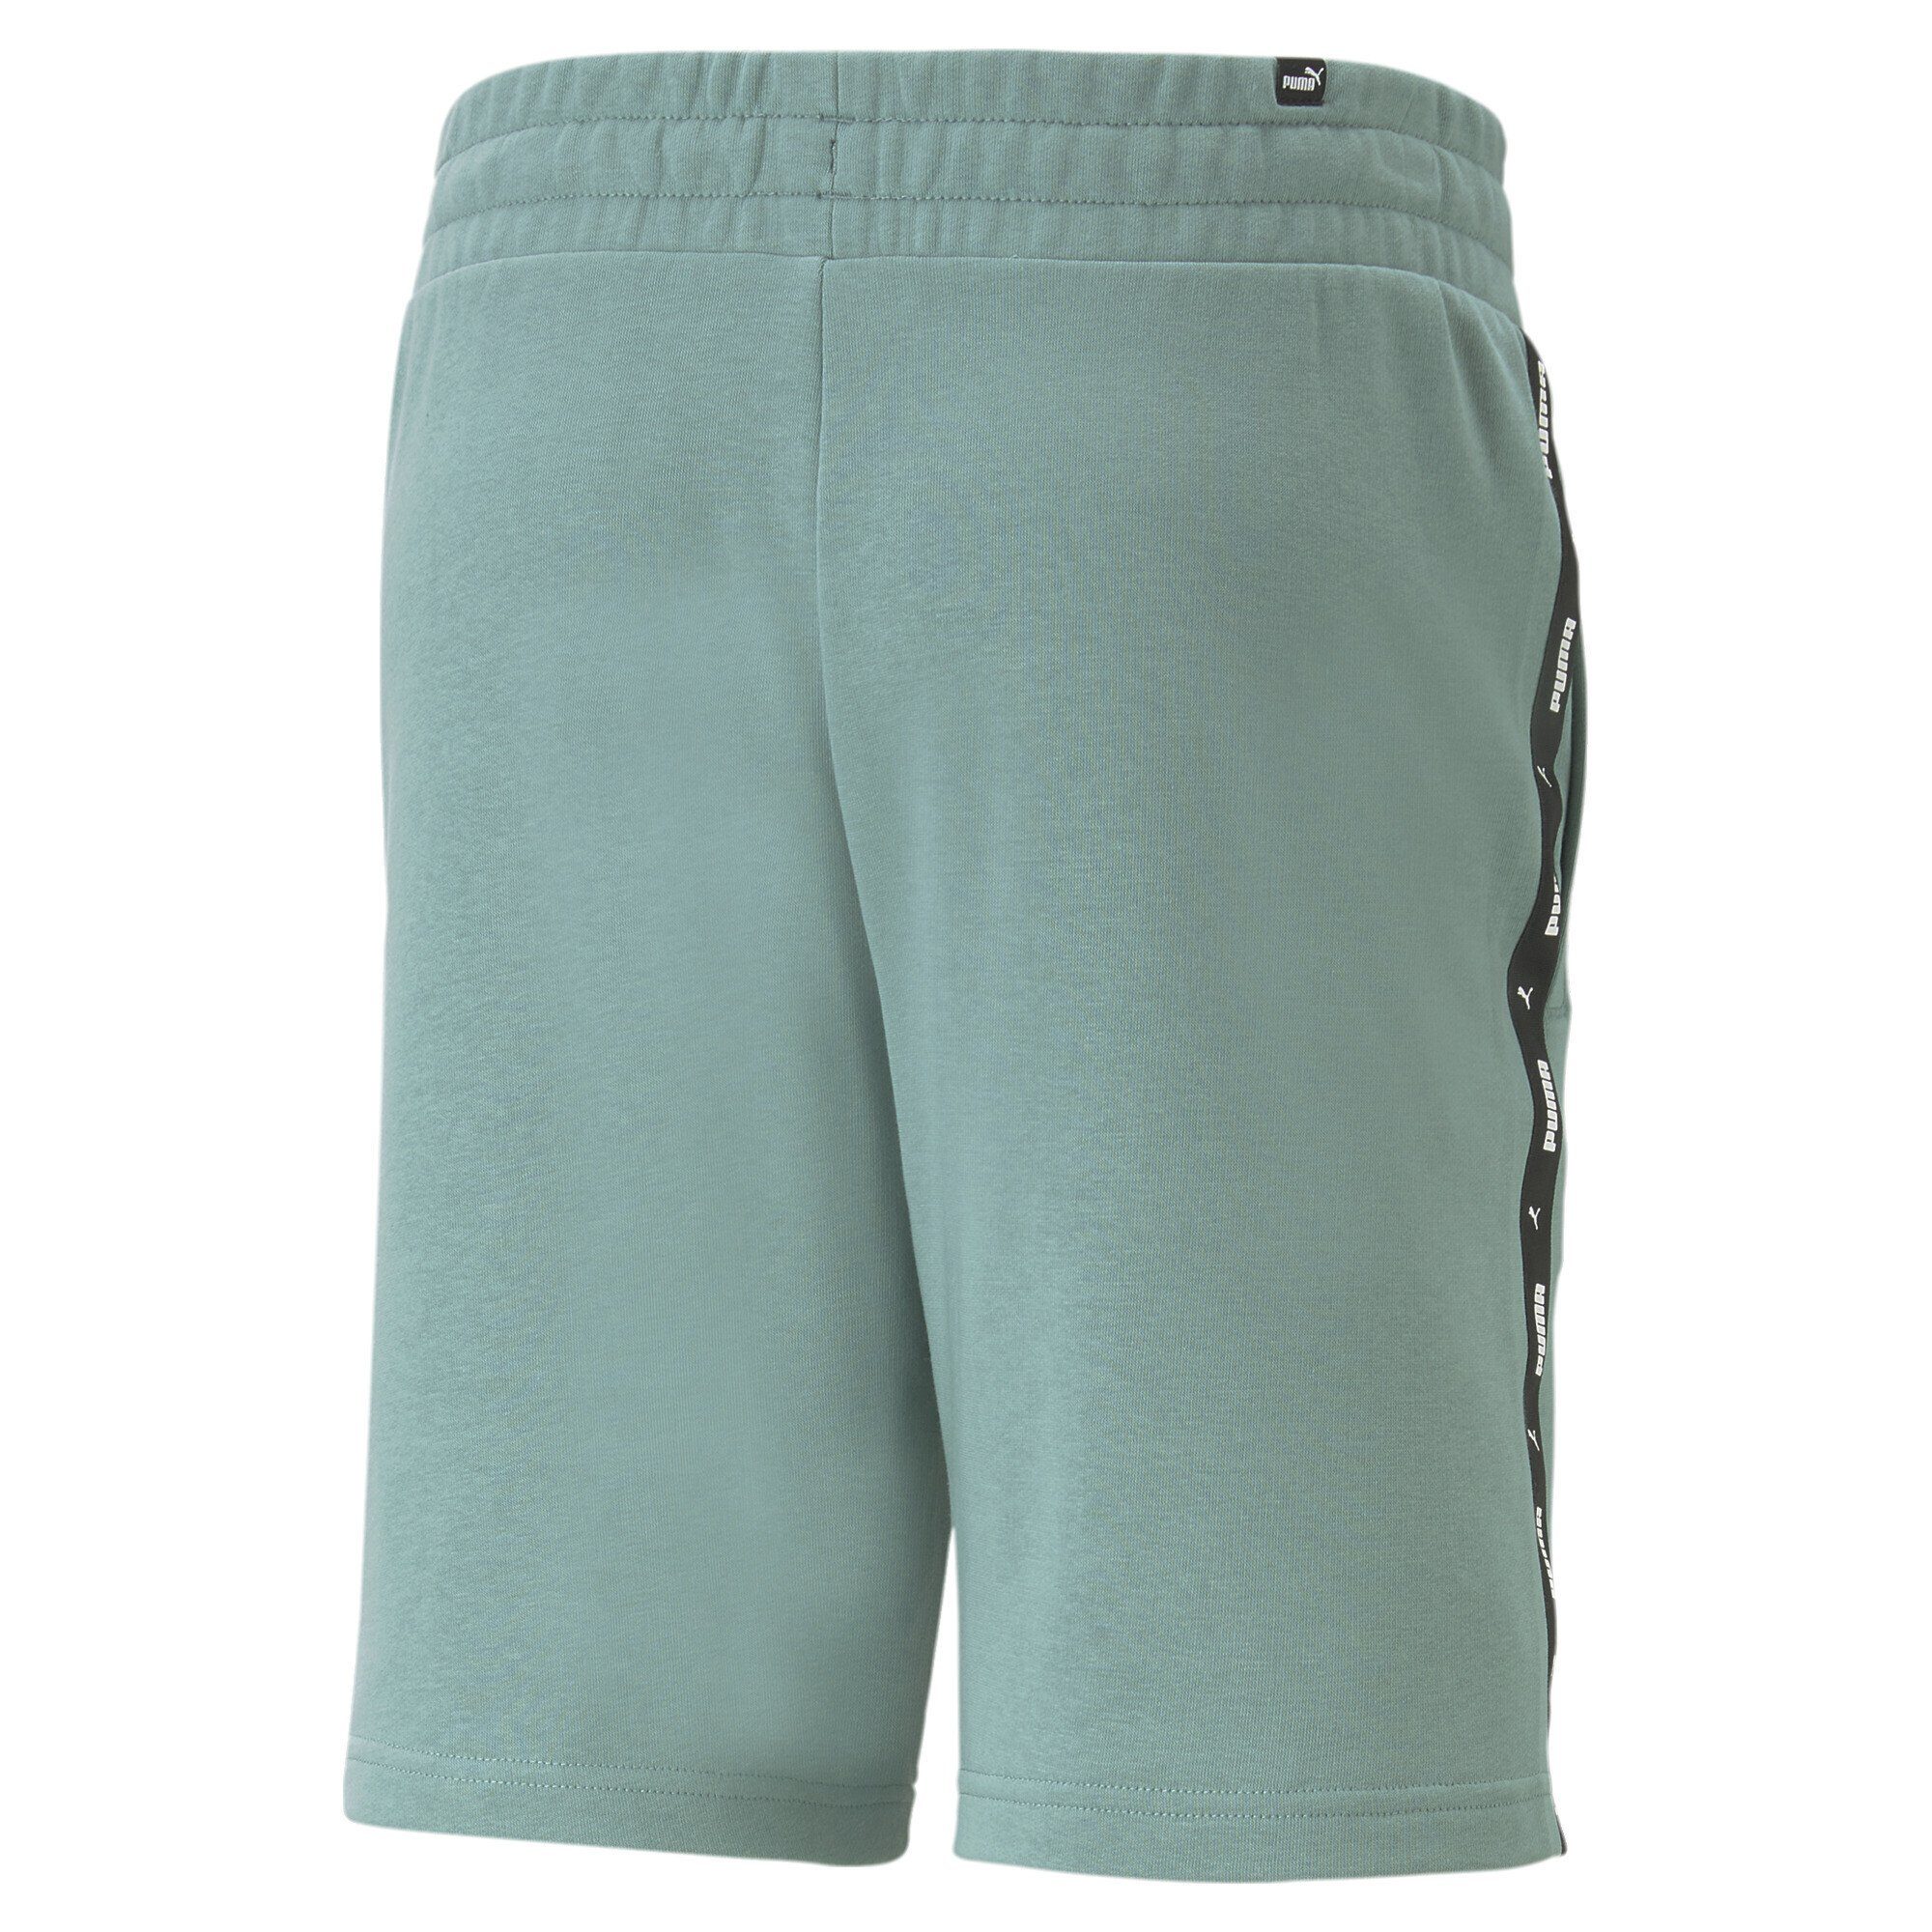 Adriatic PUMA Essentials+ Sporthose Shorts Herren Gray